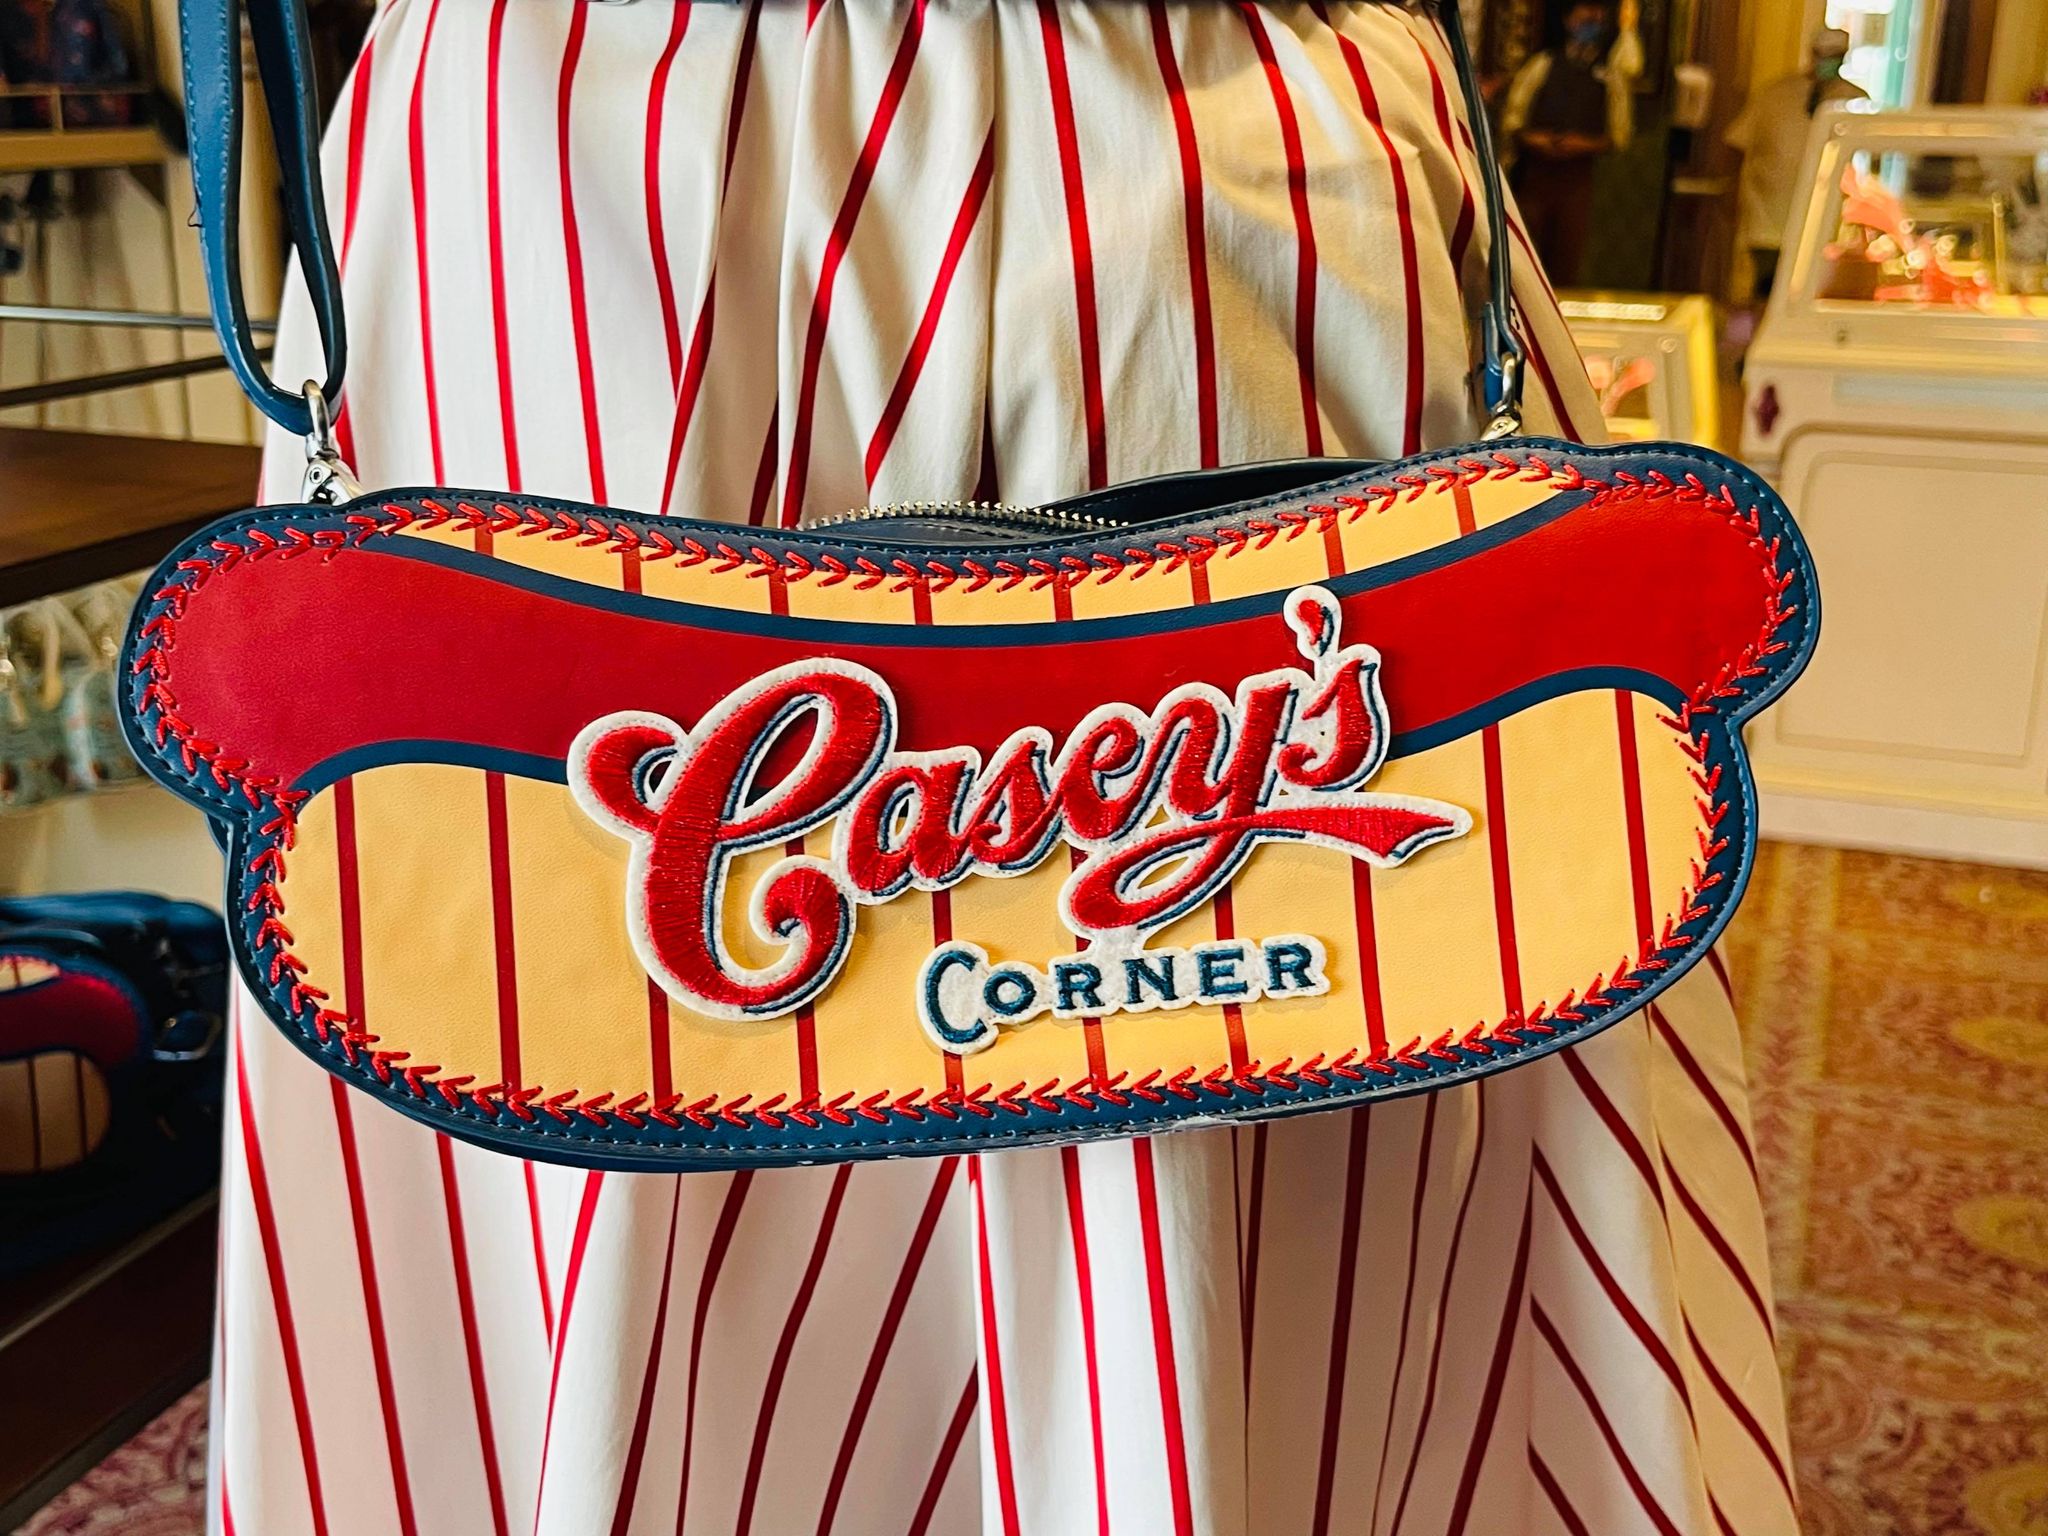 caseys corner hot dog purse 